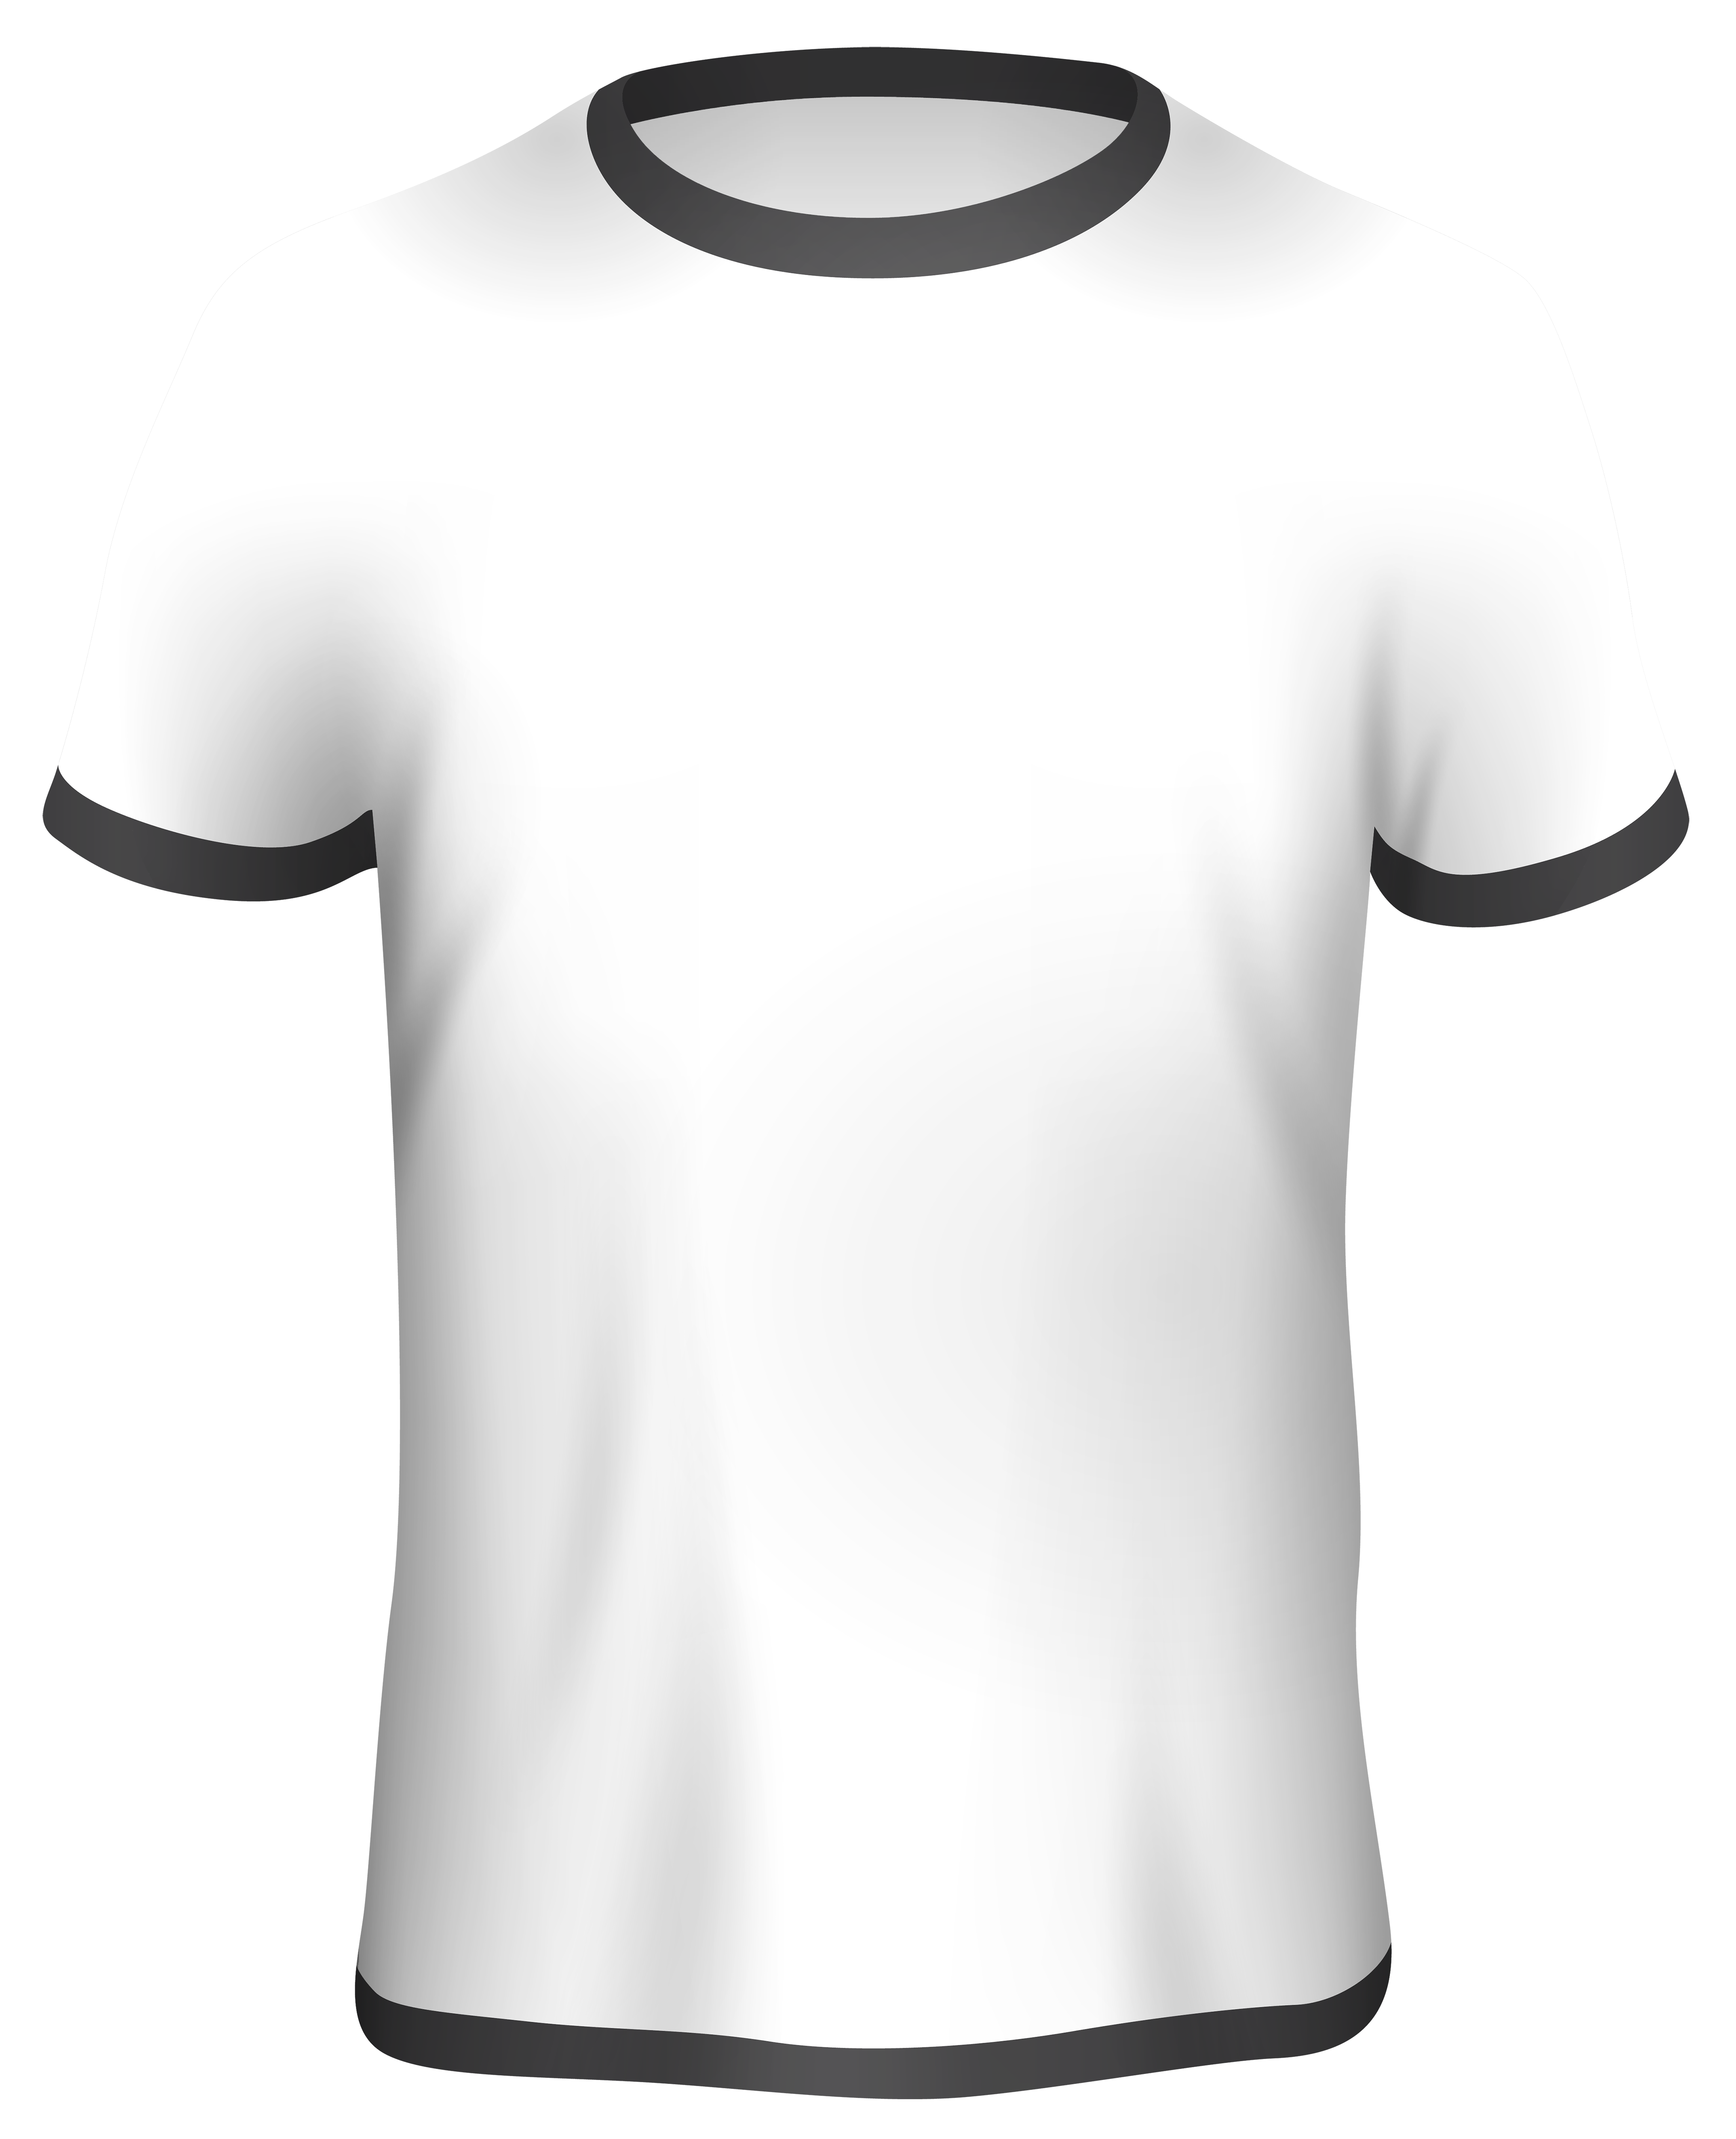 Download T Shirt Mockup White Png - Free Layered SVG Files - Free ...